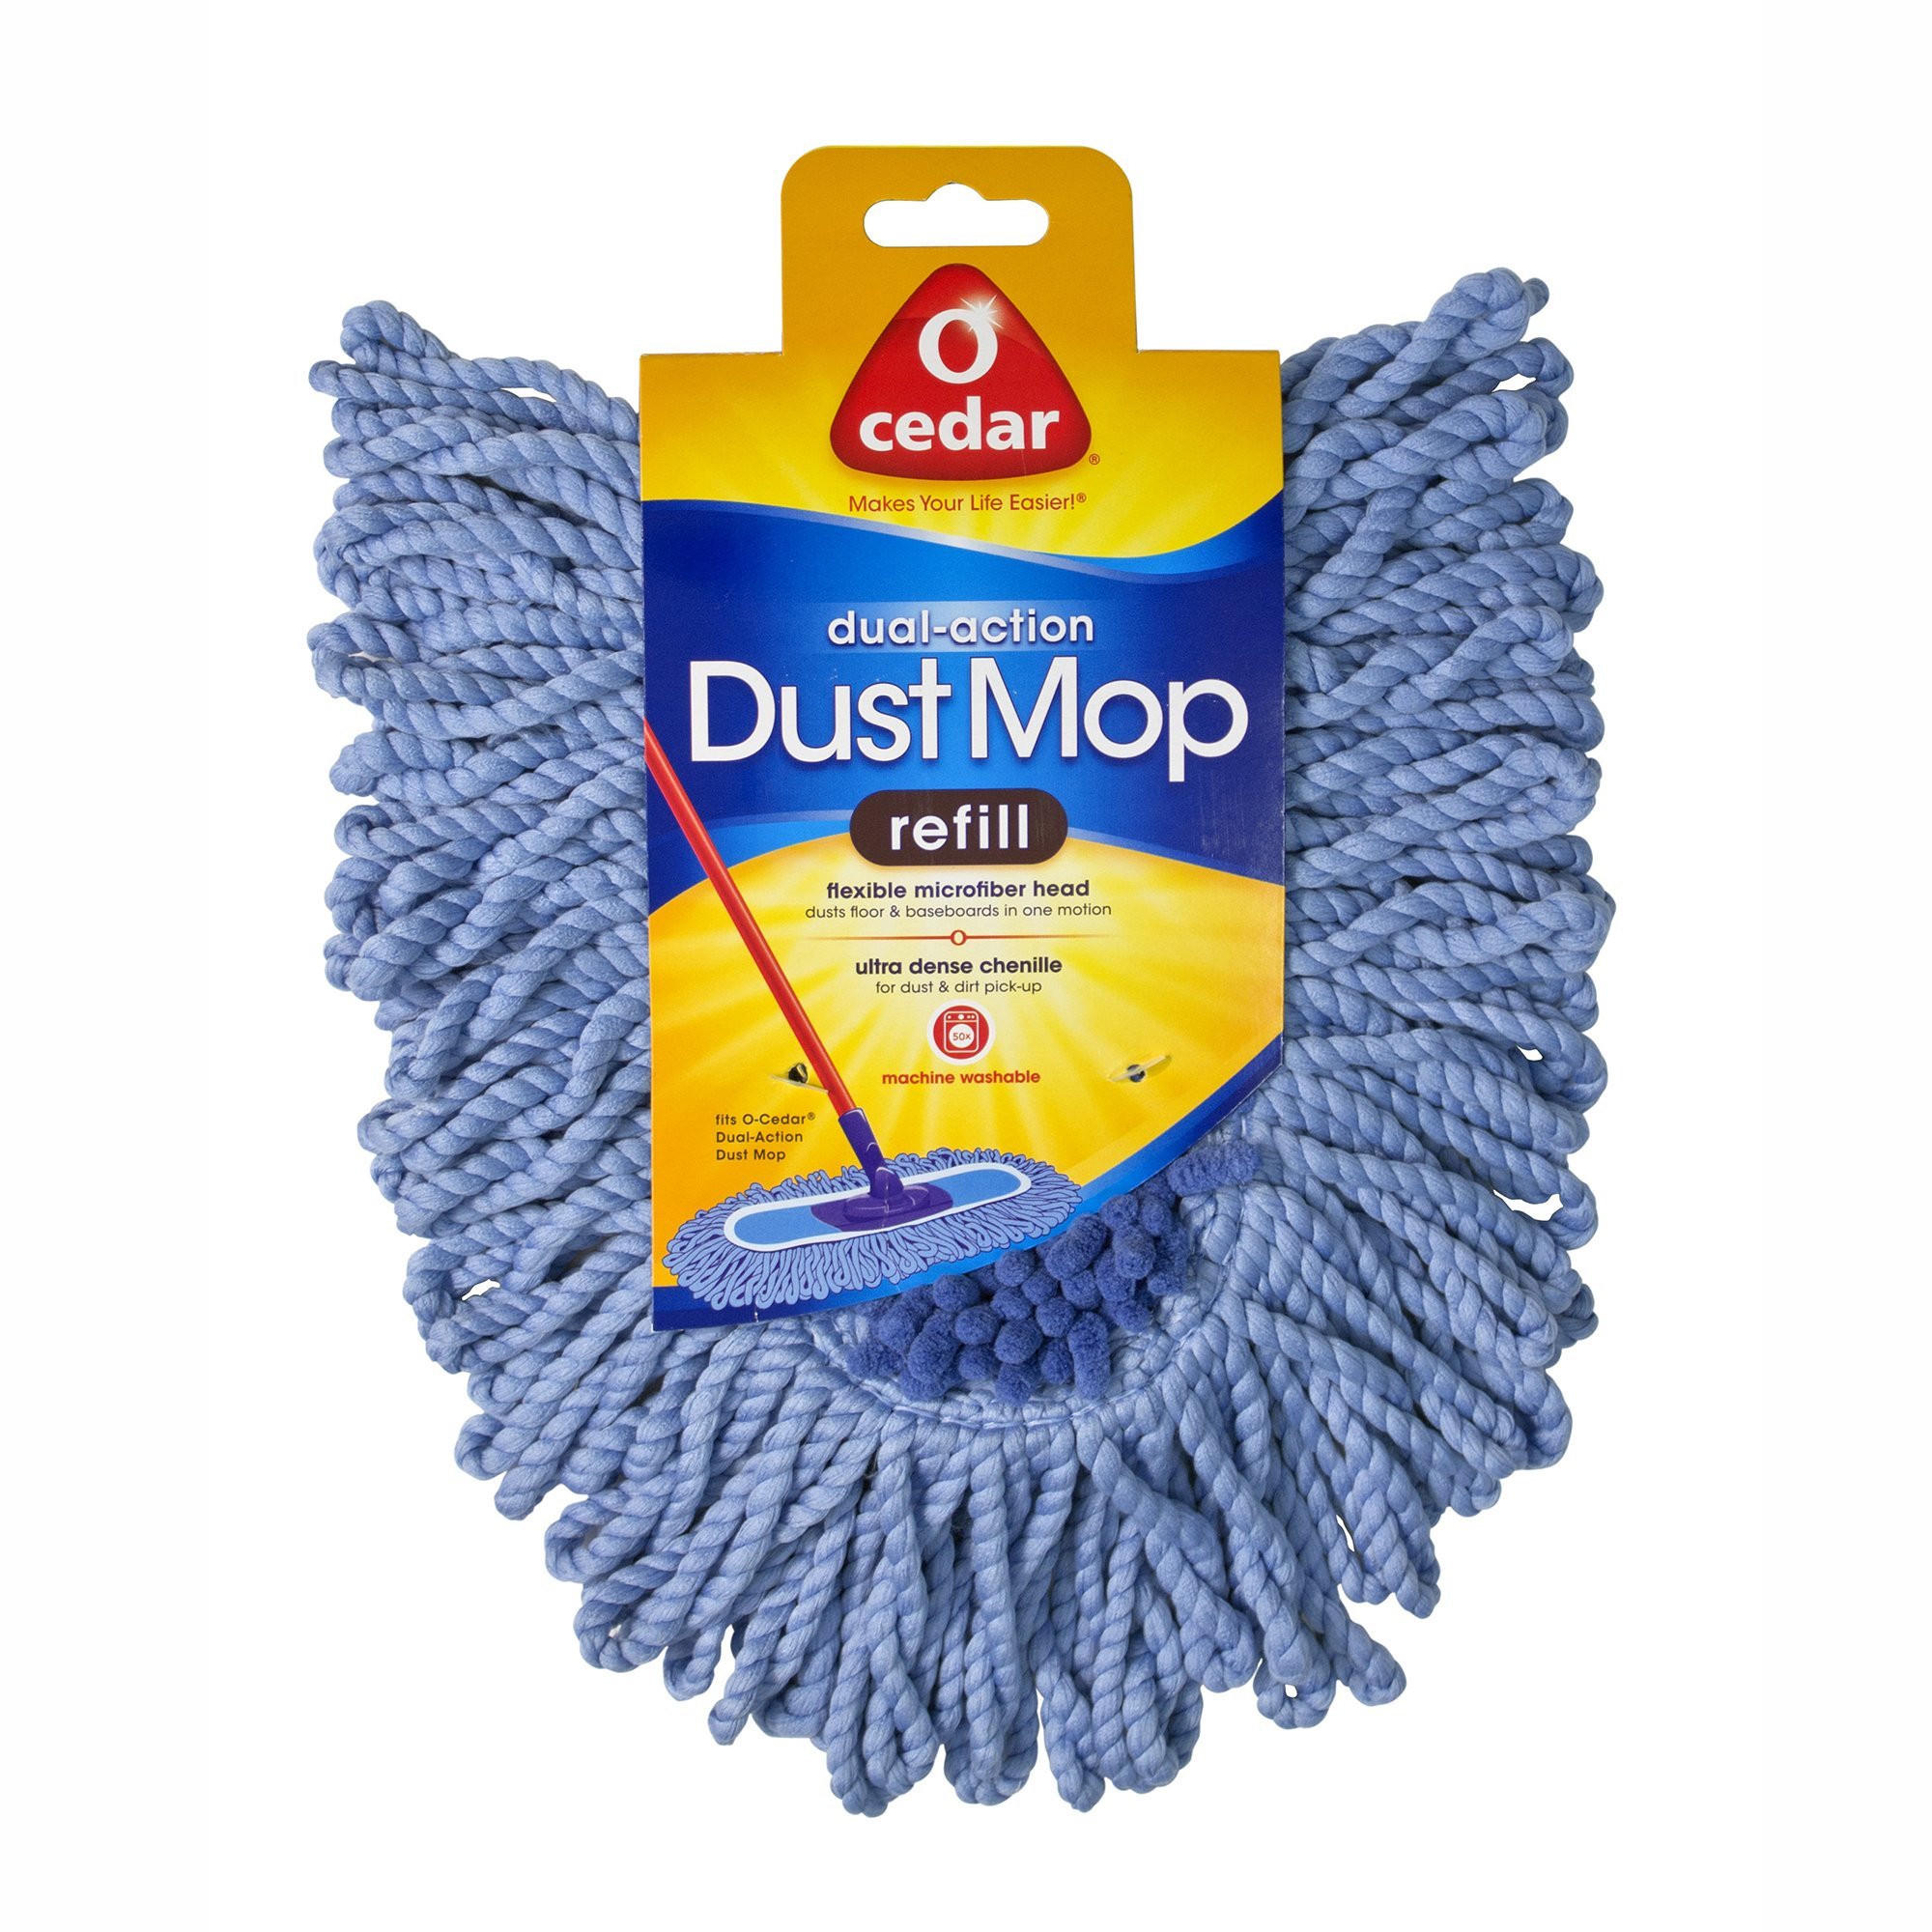 O-Cedar Dual-Action Dust Mop Refill